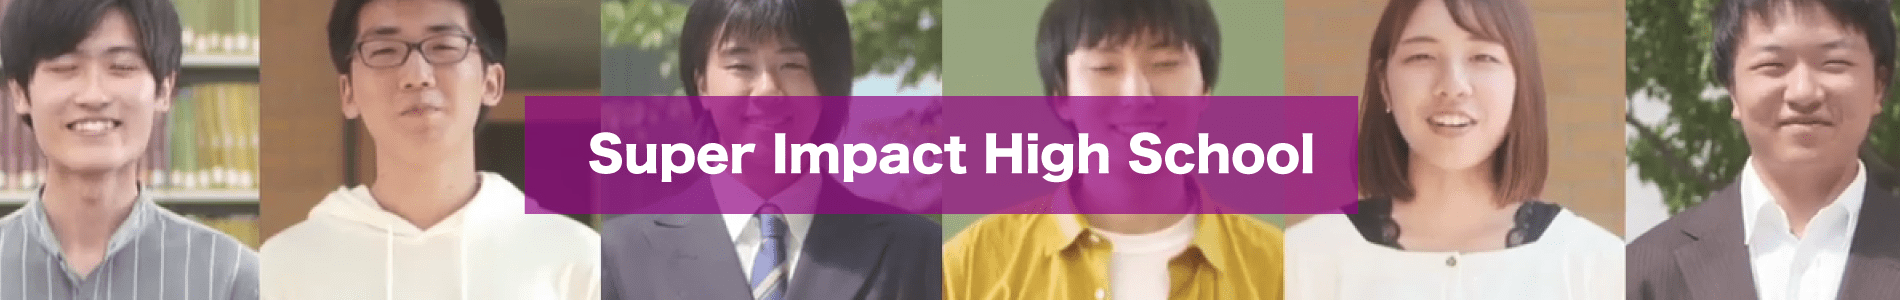 Super Impact High School